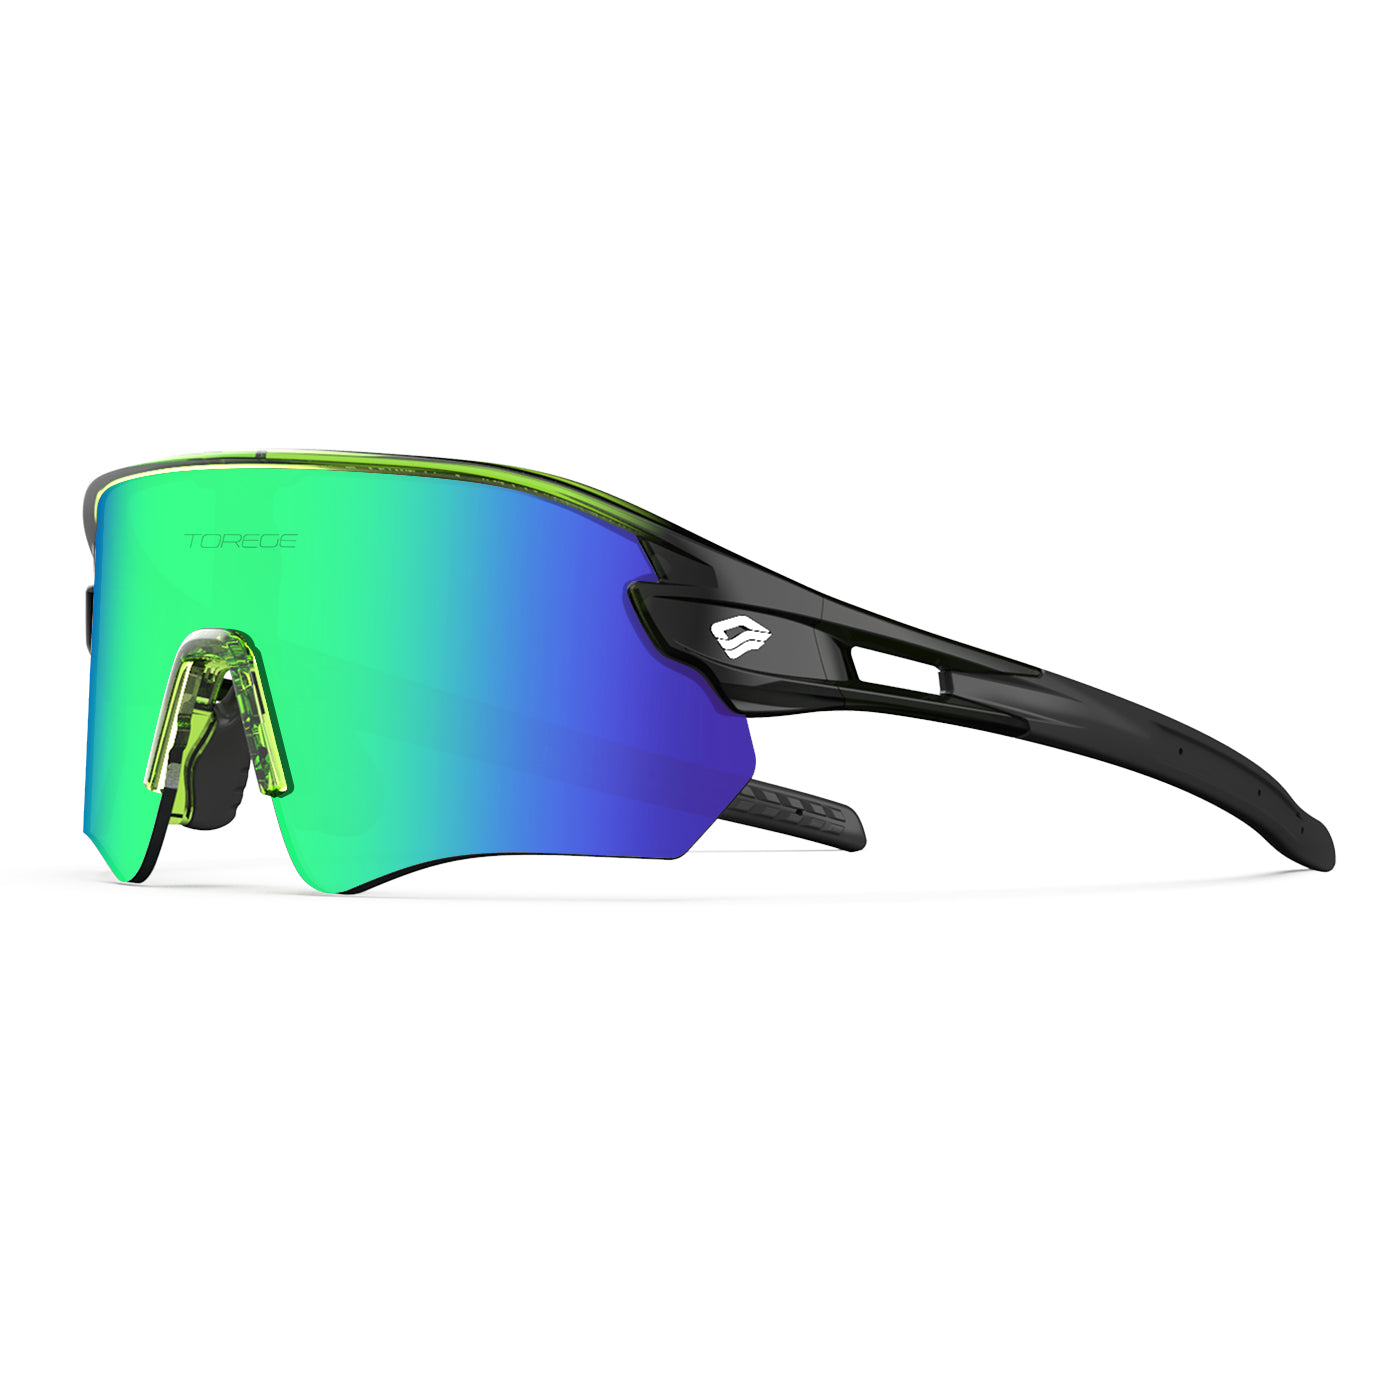 NeonGaze Ultra Lightweight Sports Sunglasses for Men & Women With